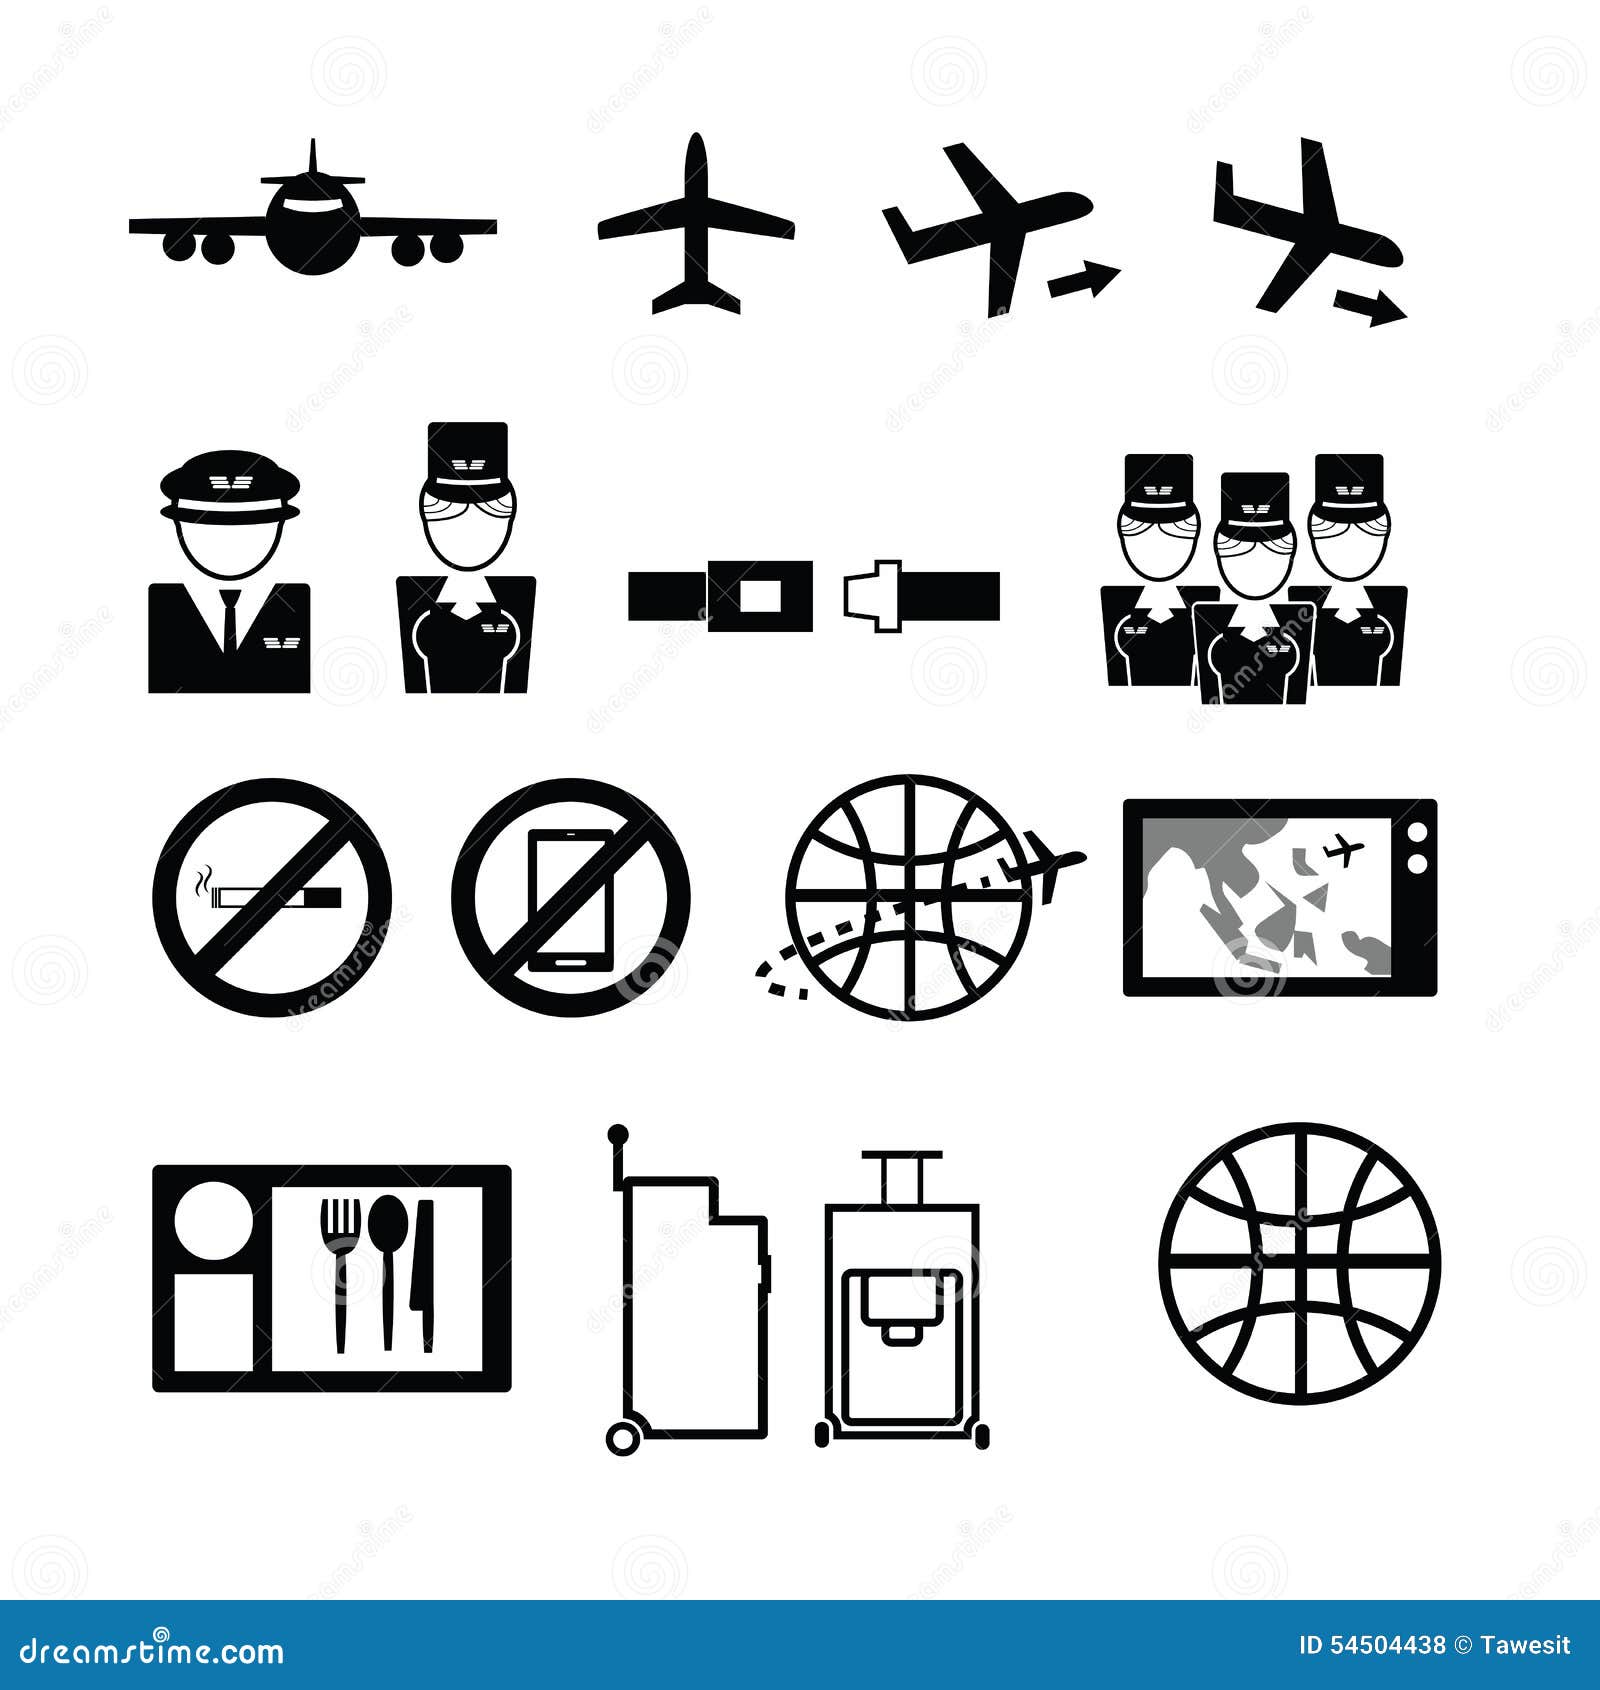 airways service icons set